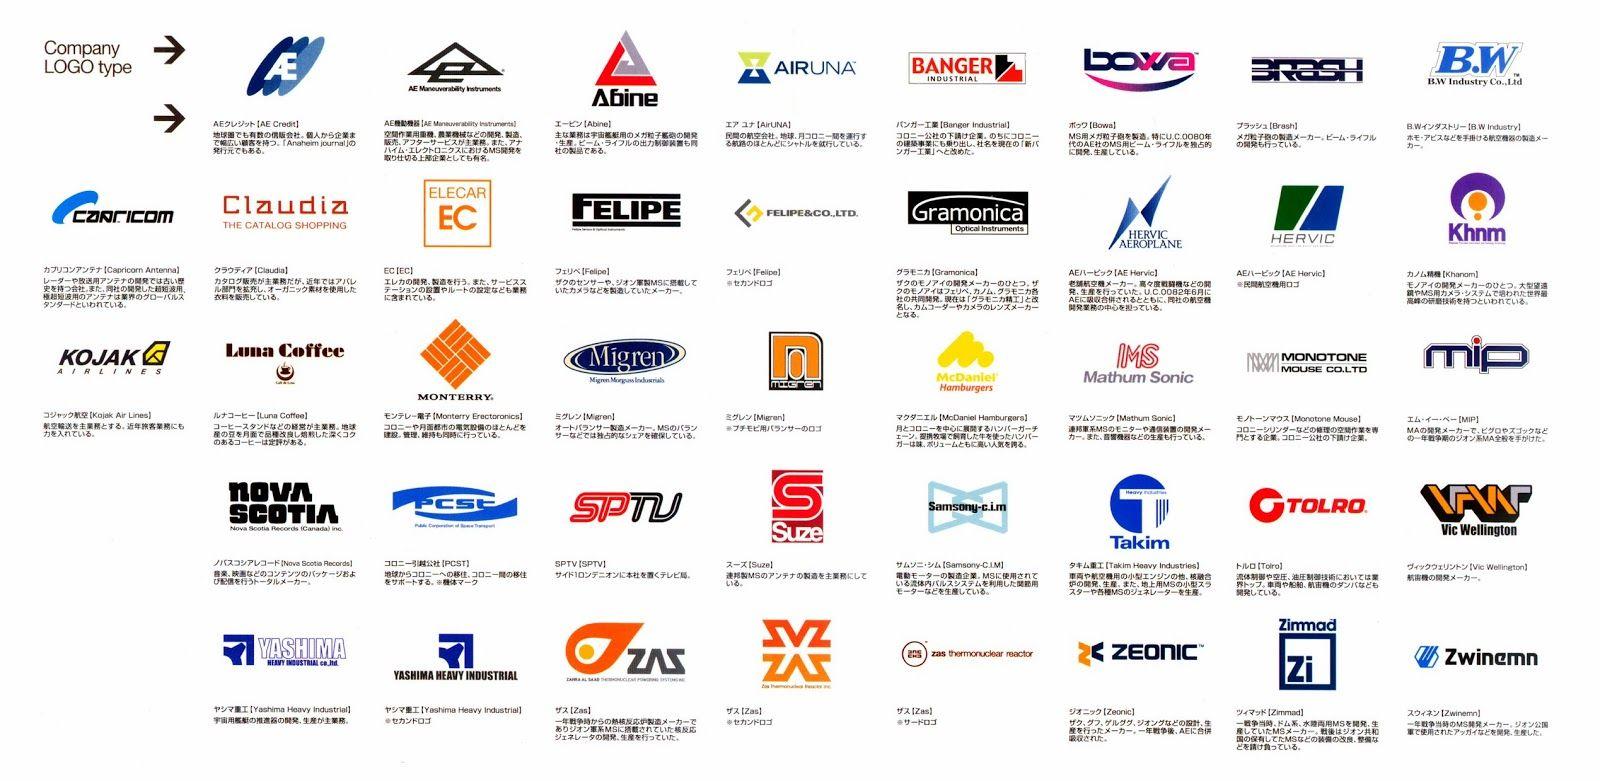 Automotive Company Logo - Companies Logos - Automotive Car Center